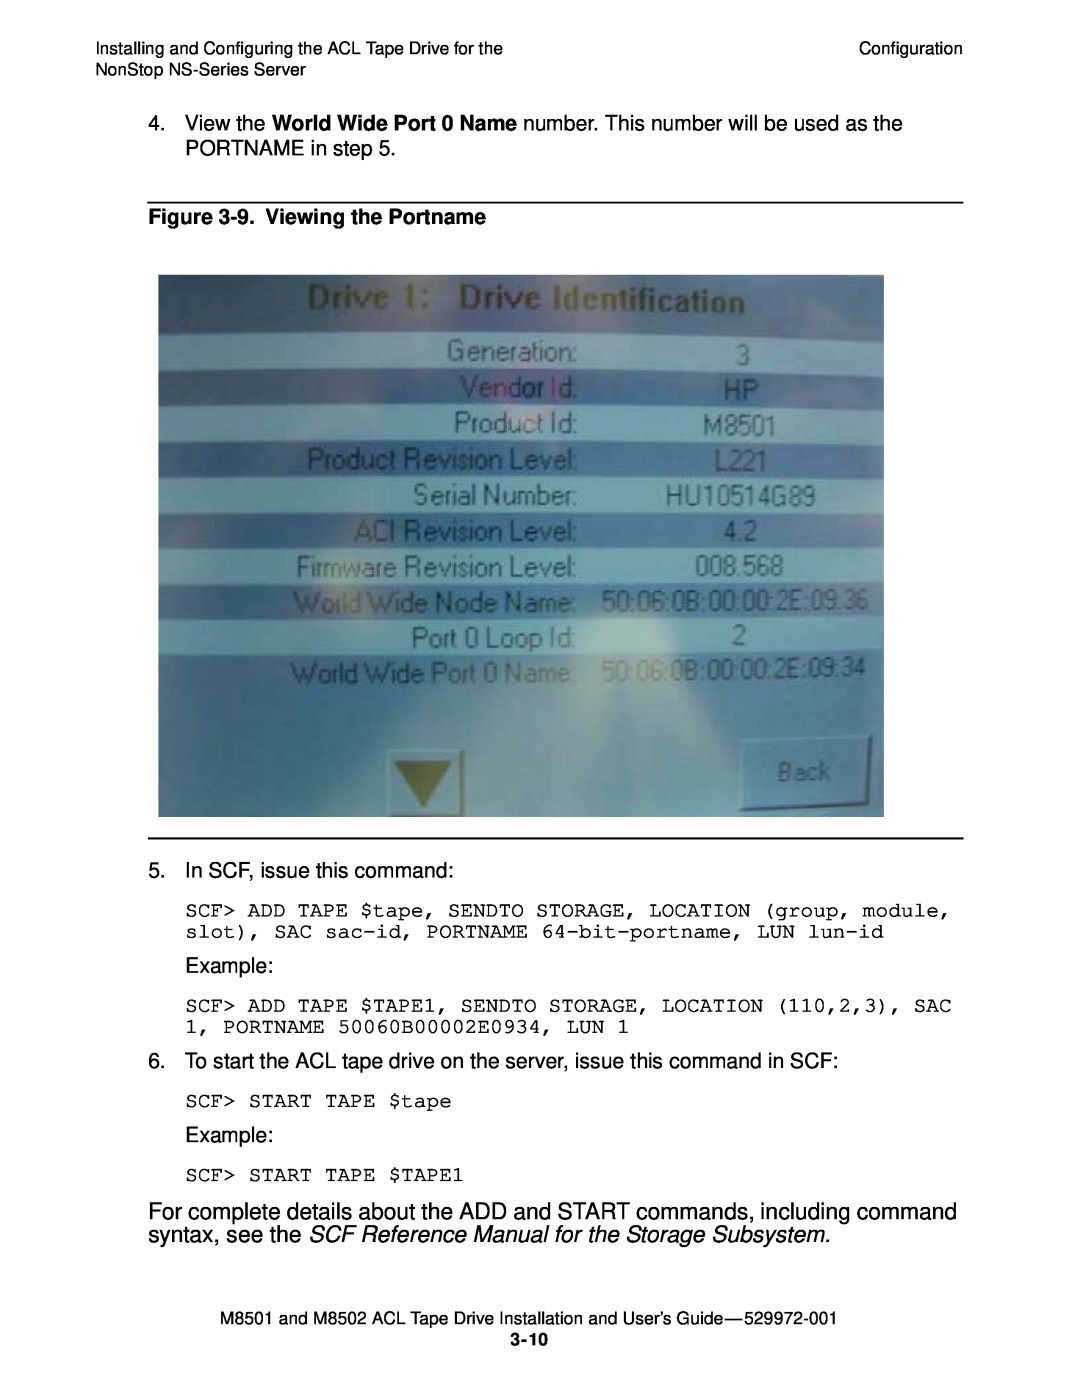 SMC Networks M8501 manual 9. Viewing the Portname, SCF START TAPE $tape, SCF START TAPE $TAPE1, Configuration, 3-10 